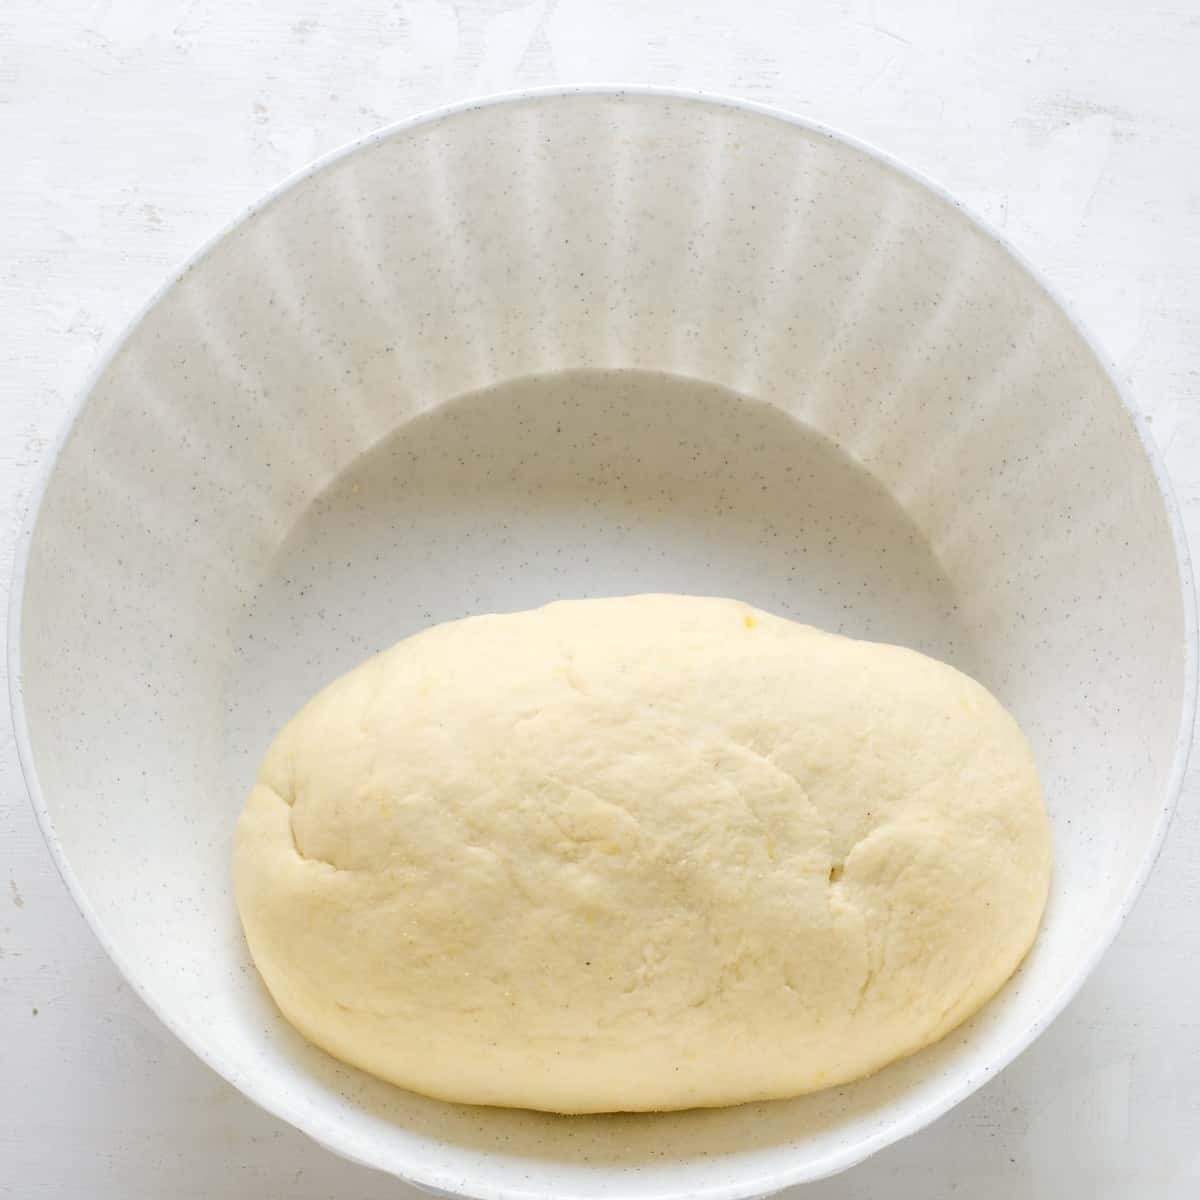 Yeast dough.